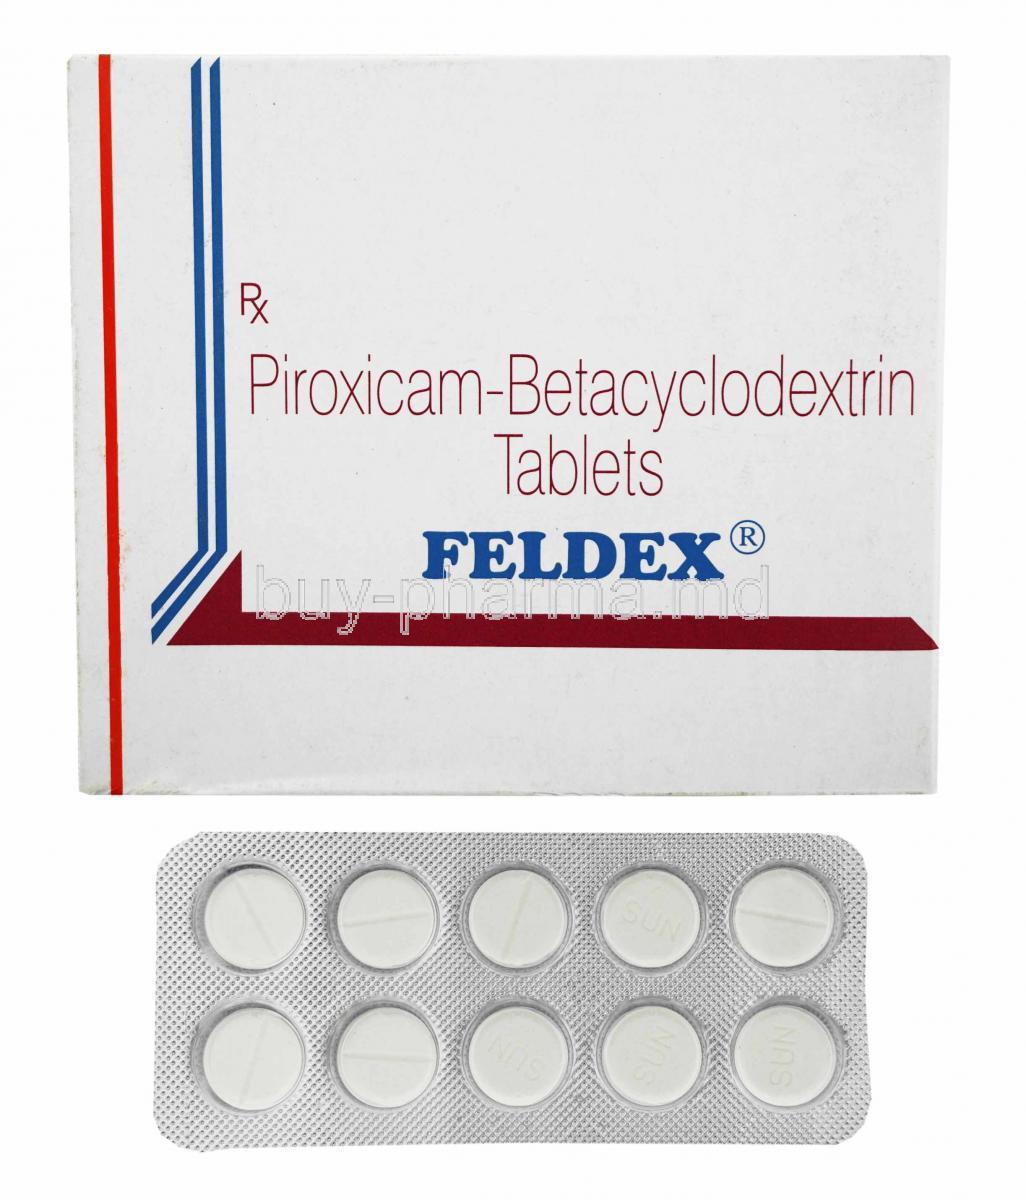 Feldex, Piroxicam box and tablets